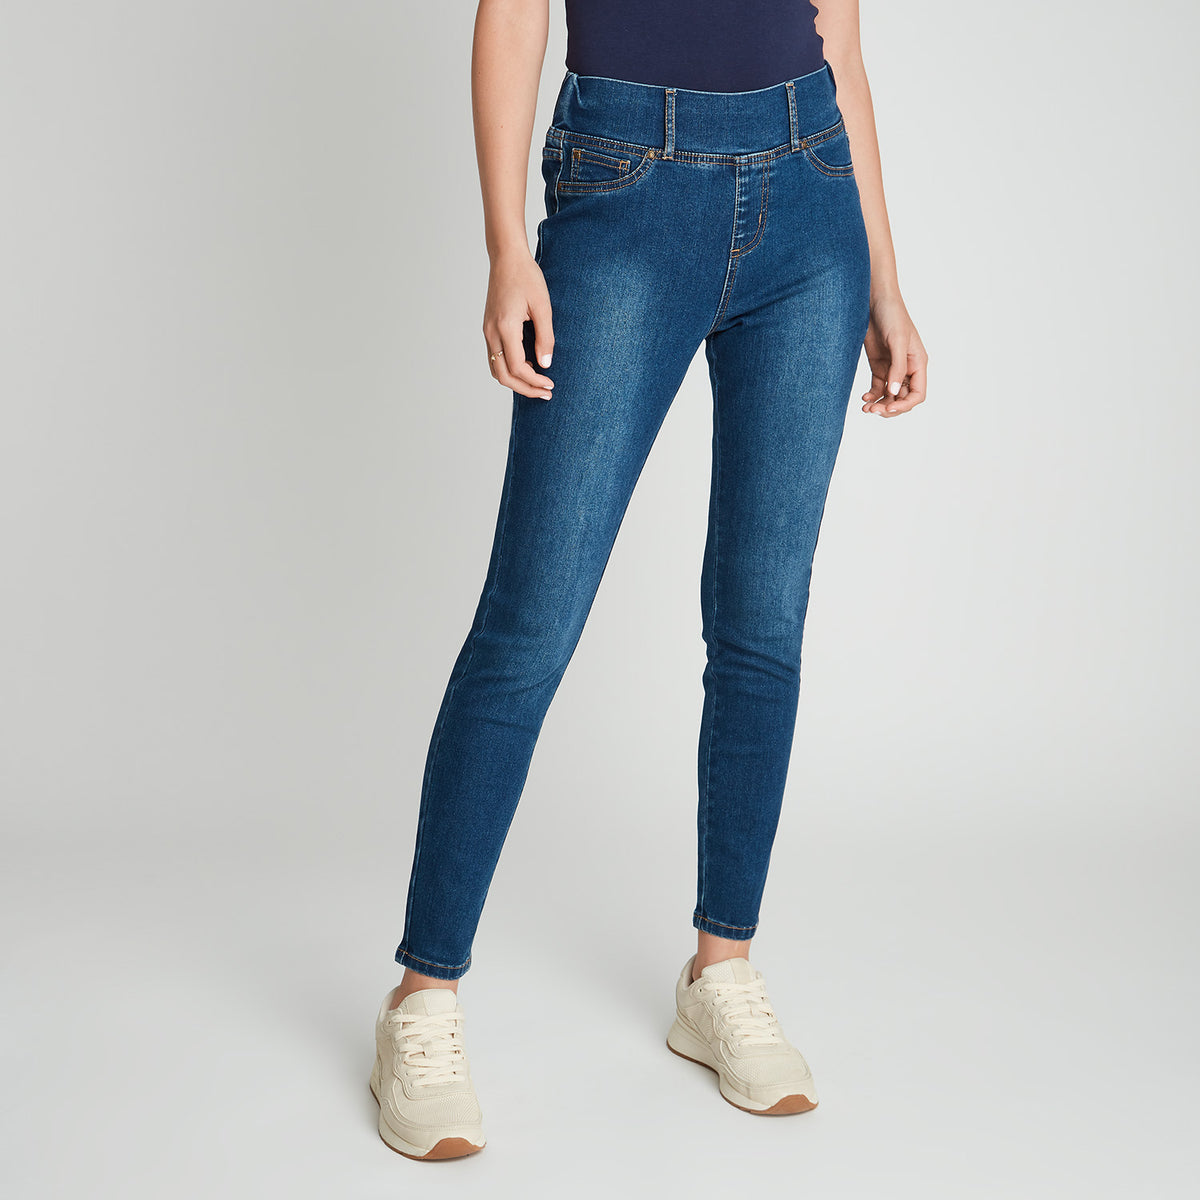 Productoscyb - Hermoso jeans para dama TIRO ALTO 🛍🛍🛍